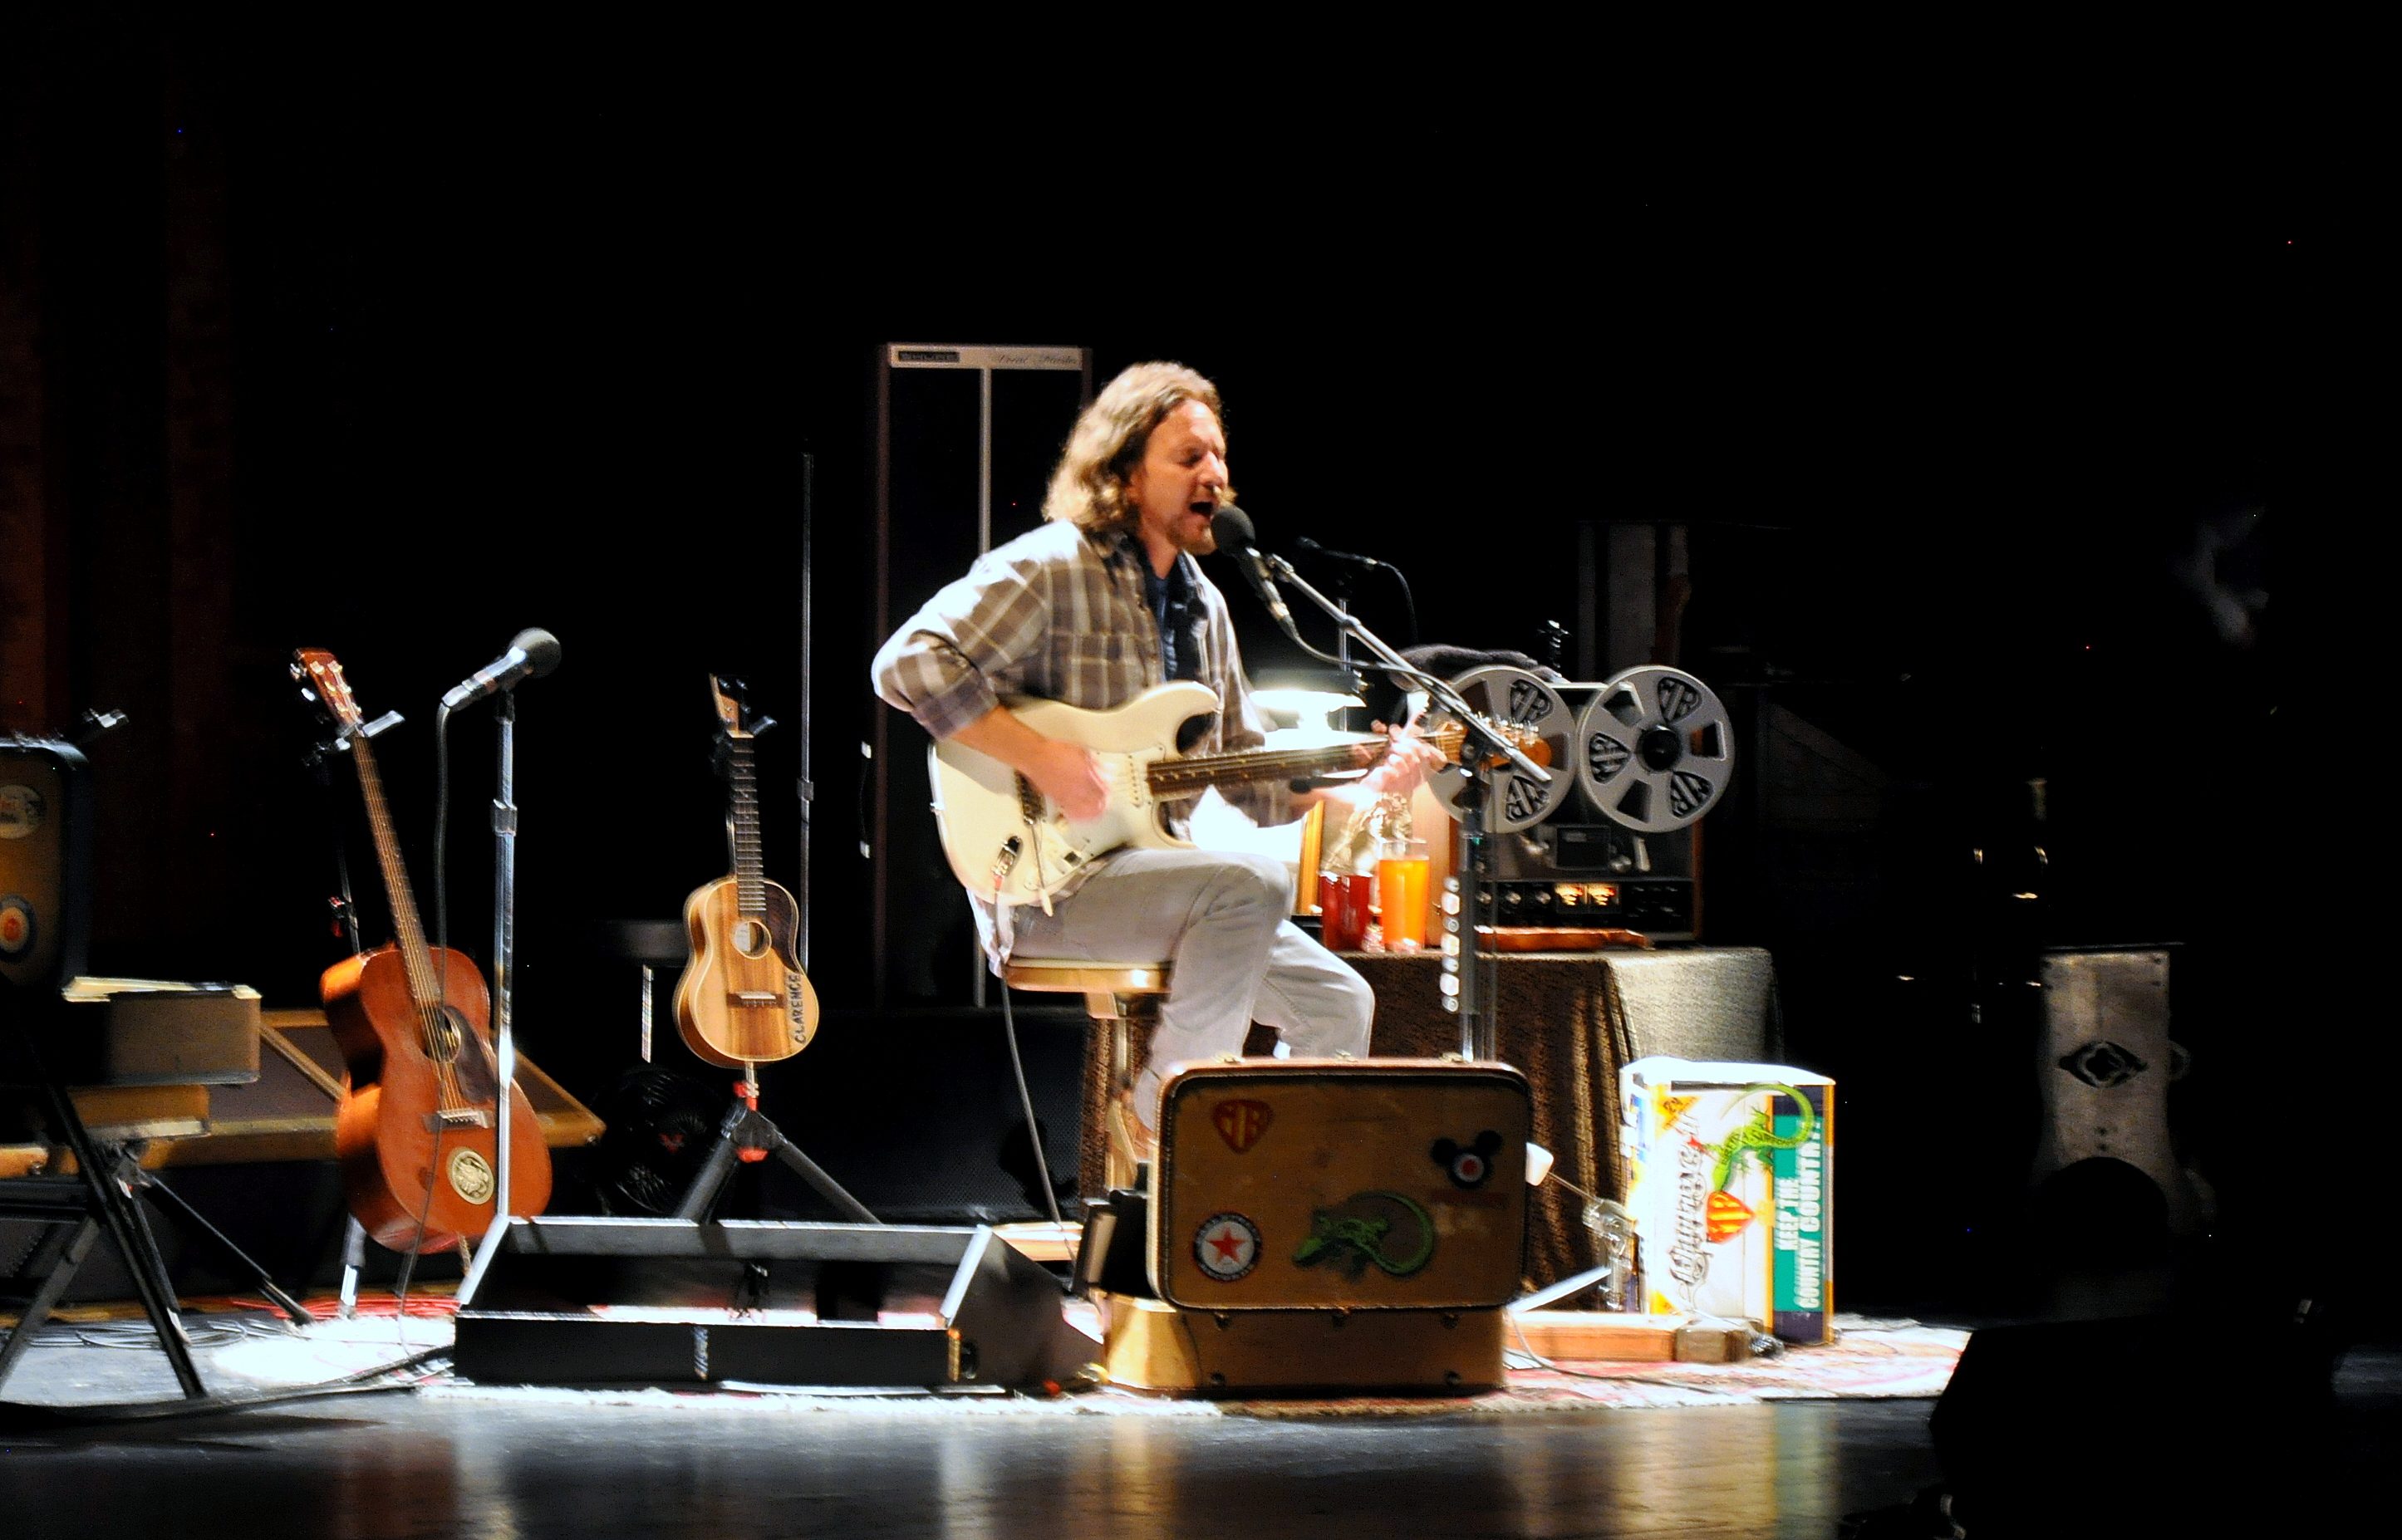 A Look Back: Eddie Vedder and Chris Cornell Perform Final Duet Singing "Hunger Strike" at Bridge School Benefit in 2014